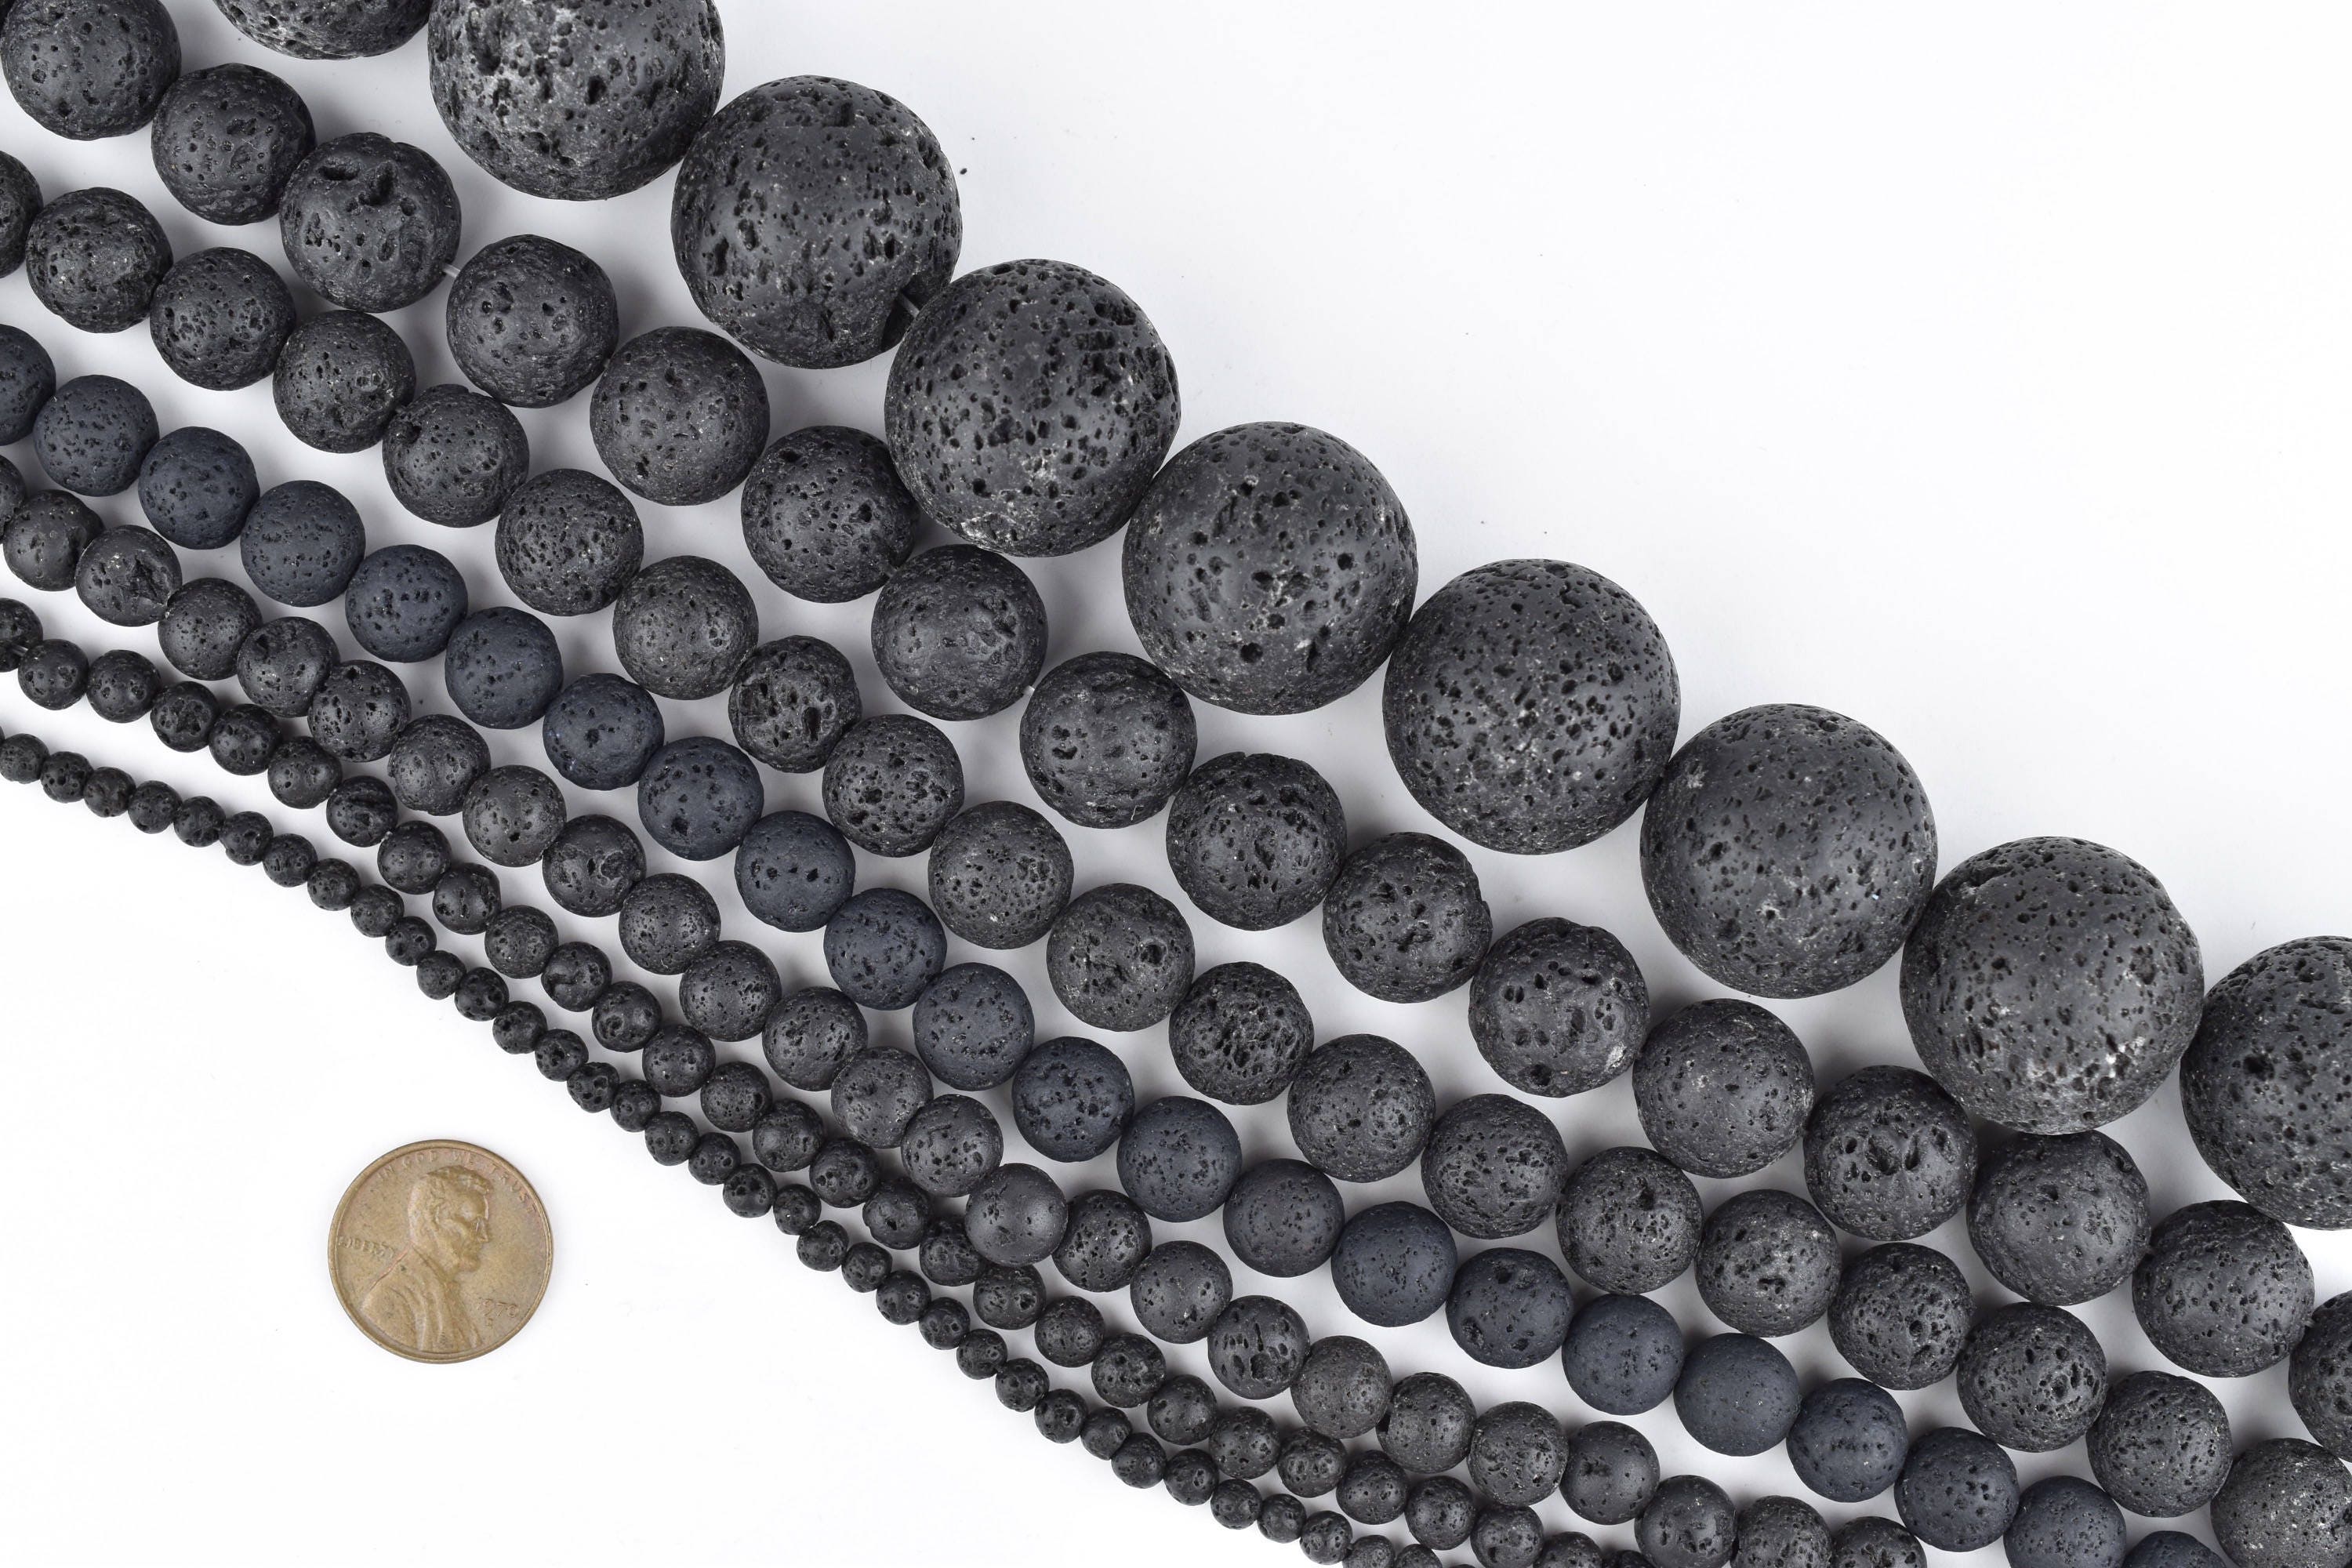 Thebeadchest Black Volcanic Lava Beads (4mm): Organic Gemstone Round Spherical Energy Stone Healing Power Crystal for Jewelry Bracelet Mala Necklace